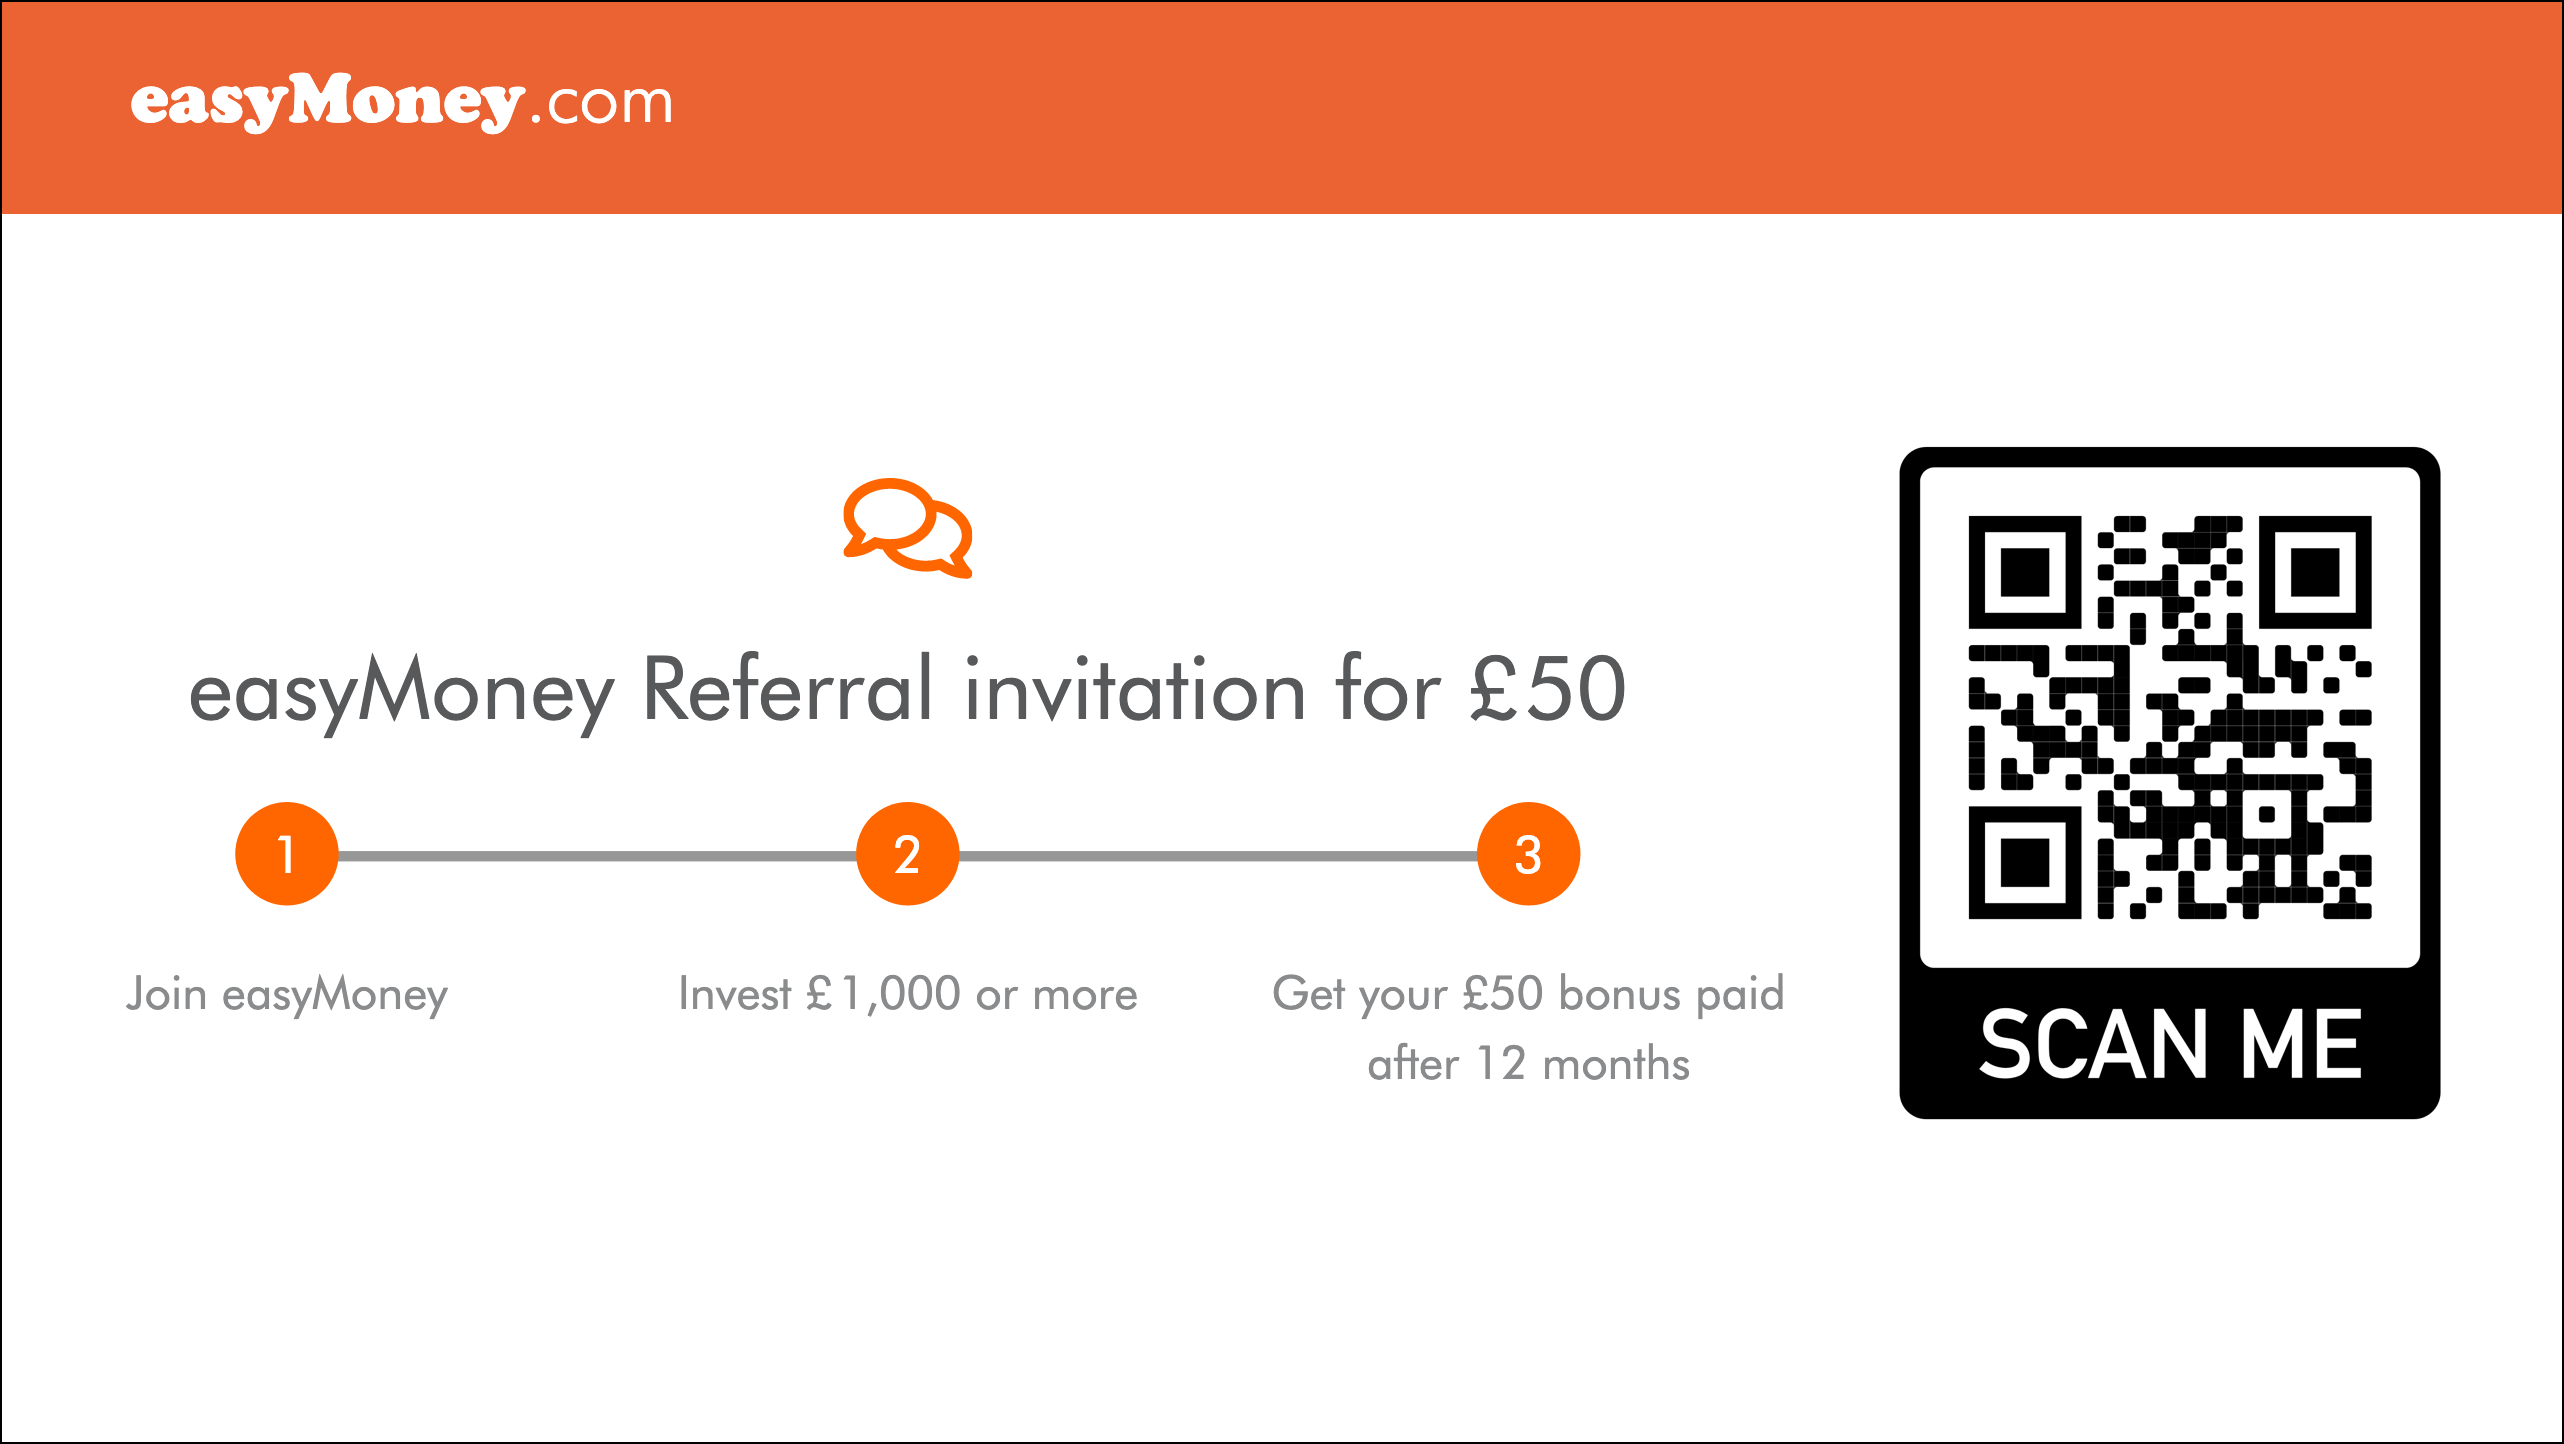 easyMoney discount code for £50 bonus (paid after 10 months) - referral invite bonus